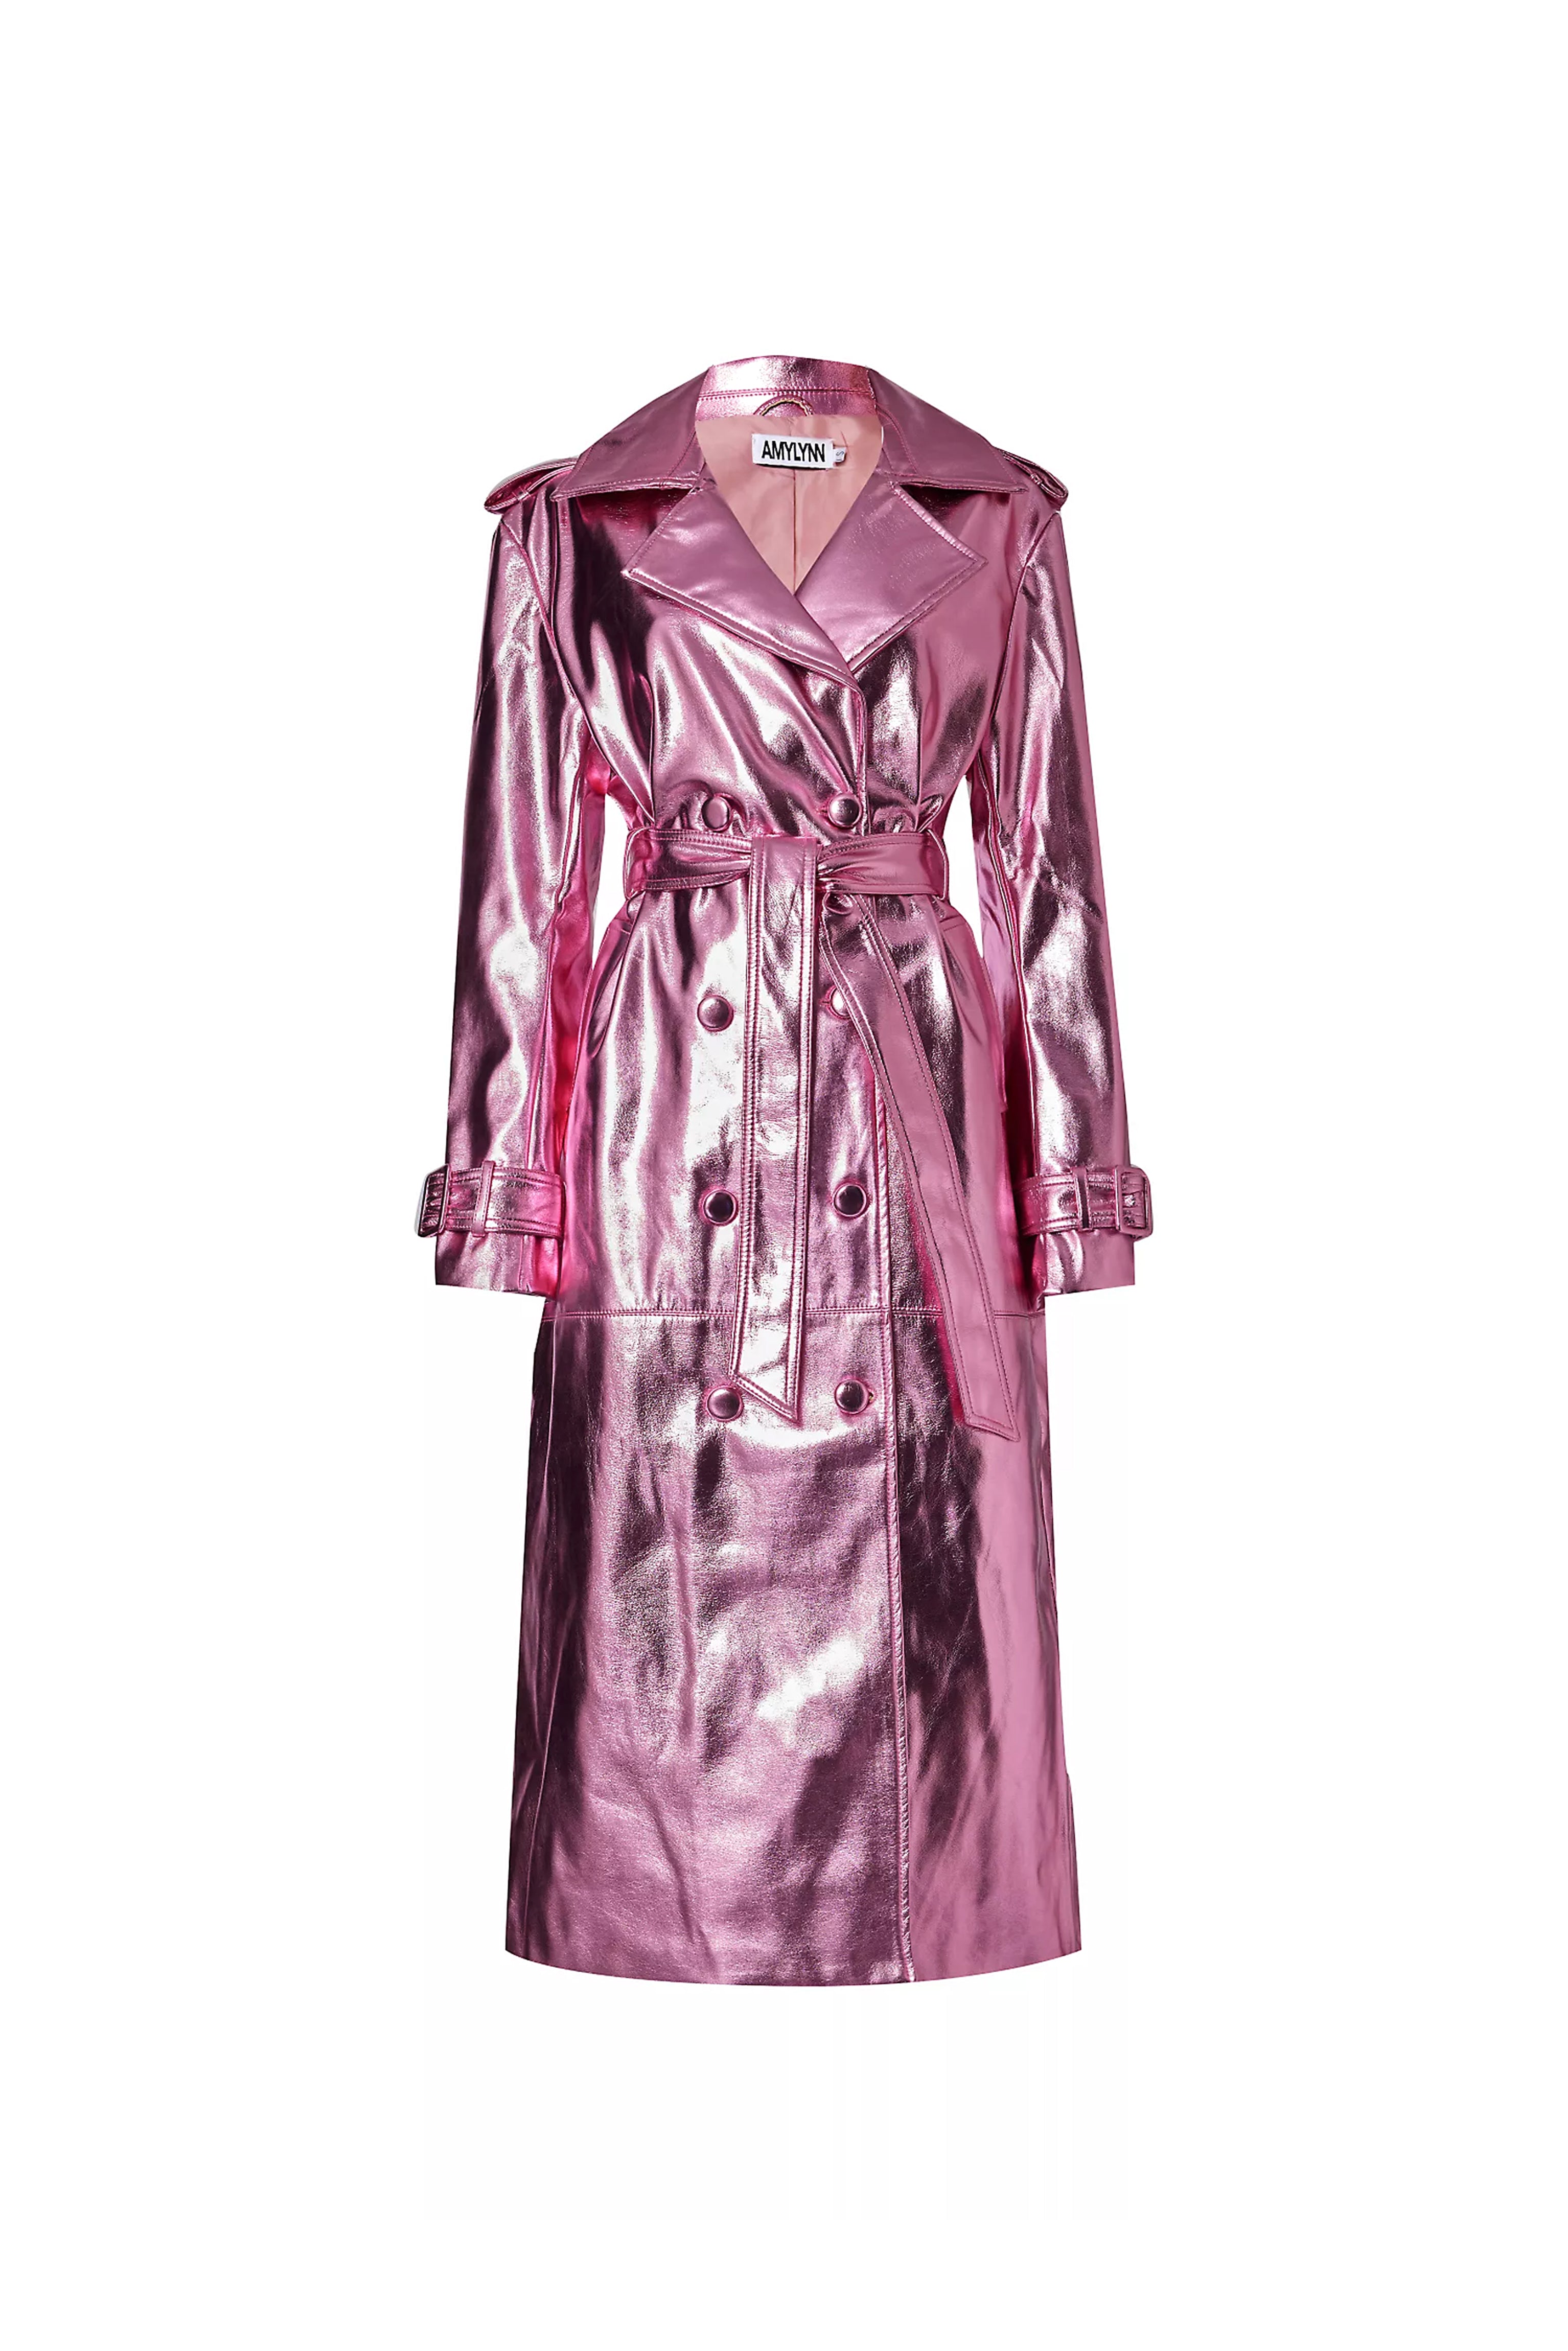 Lupe Rose Pink Metallic Vegan Leather Trench Coat | AmyLynn